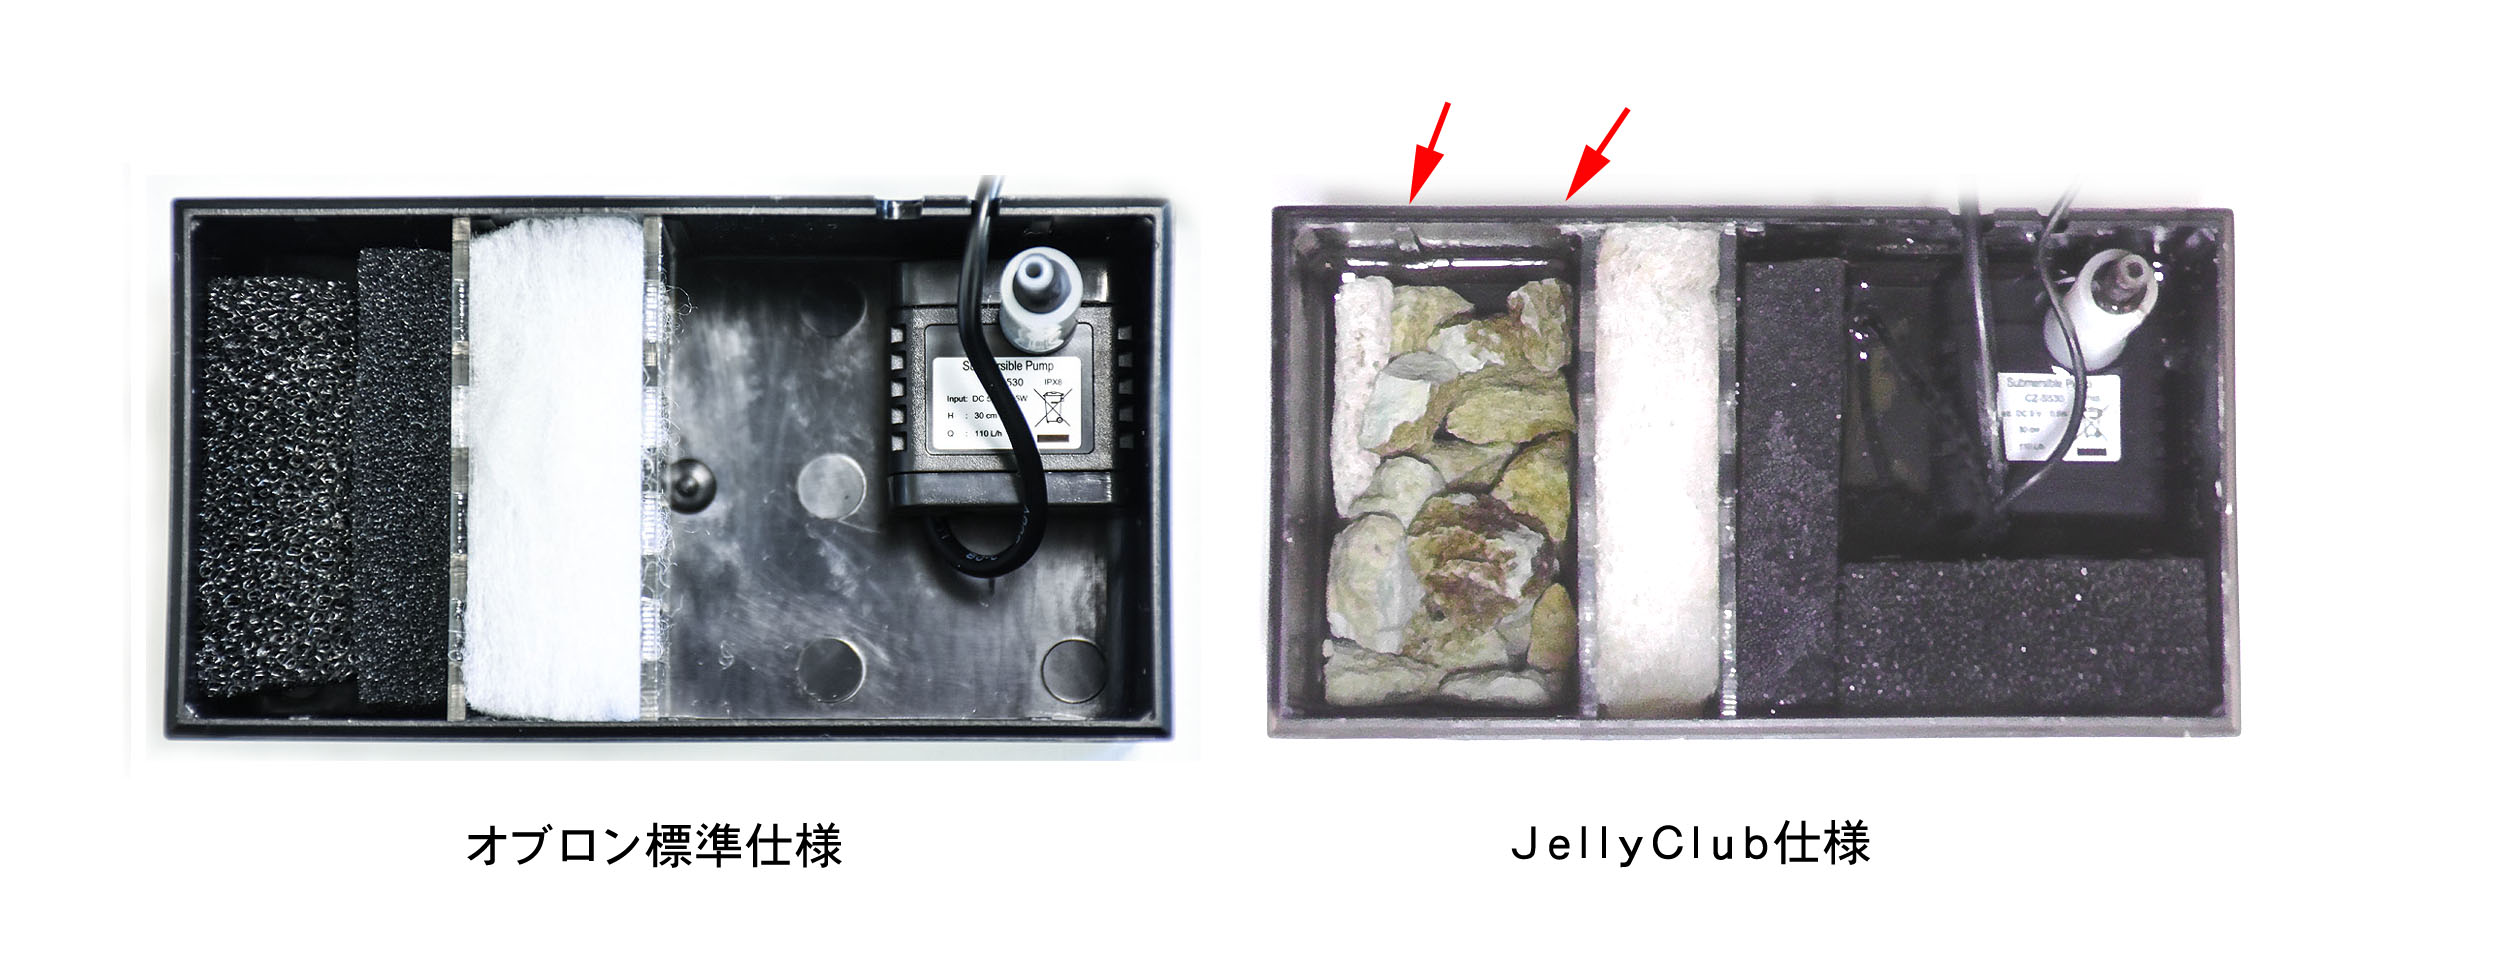 製品 超小型オーバーフロー水槽 Oblongs 15 Jc Jellyclub